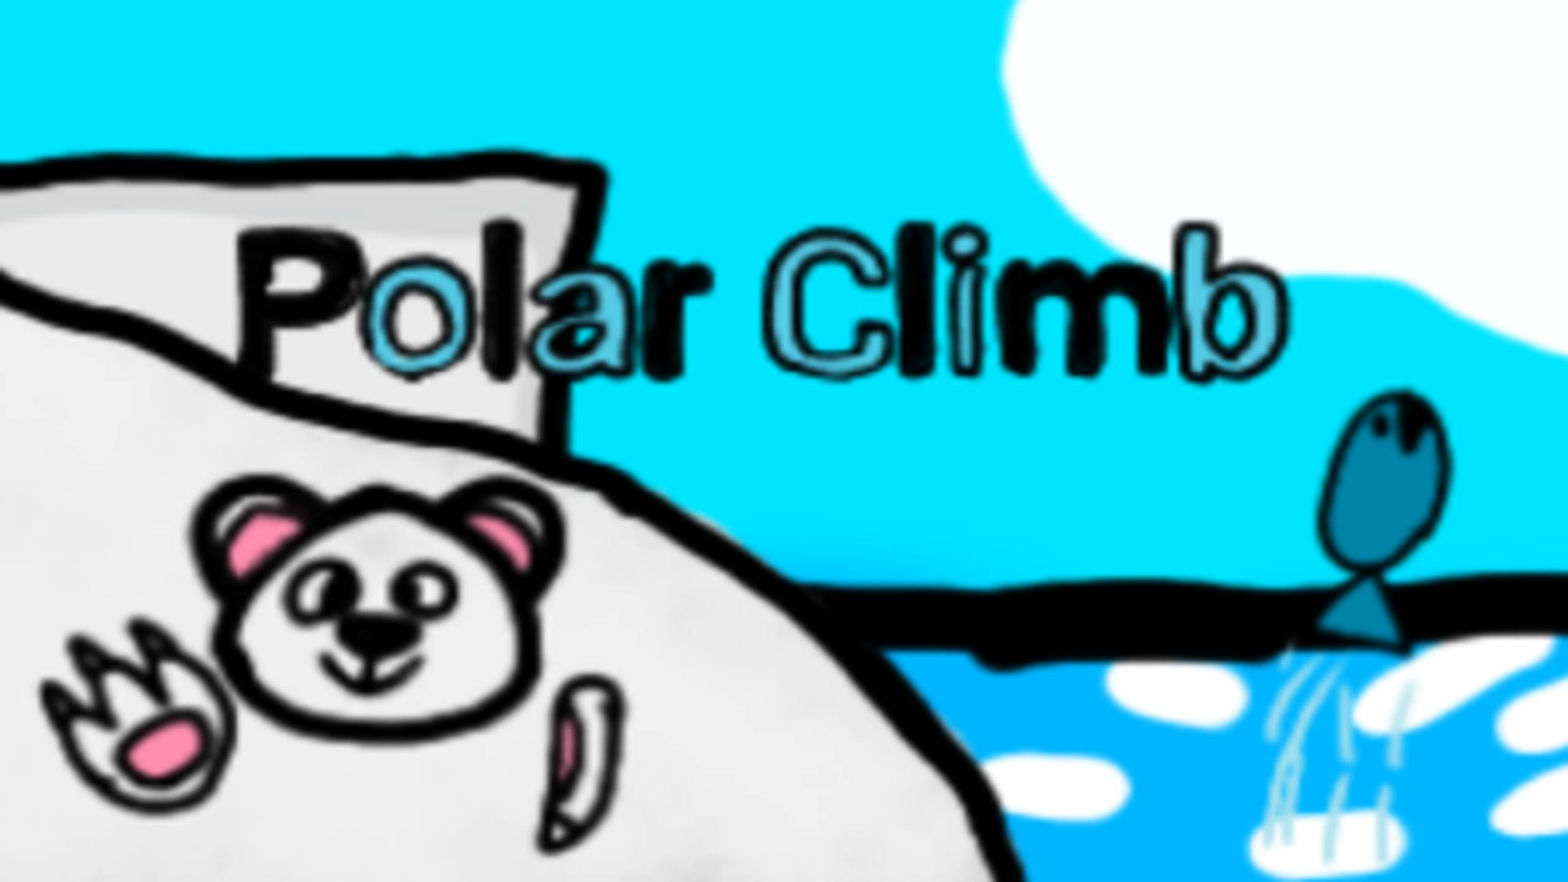 Polar Climb